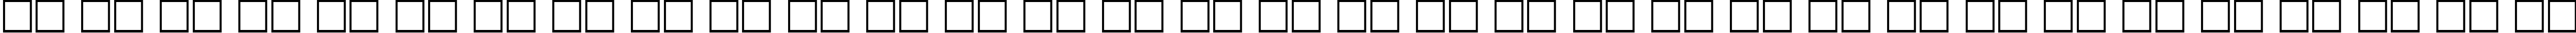 Пример написания русского алфавита шрифтом Compact_110